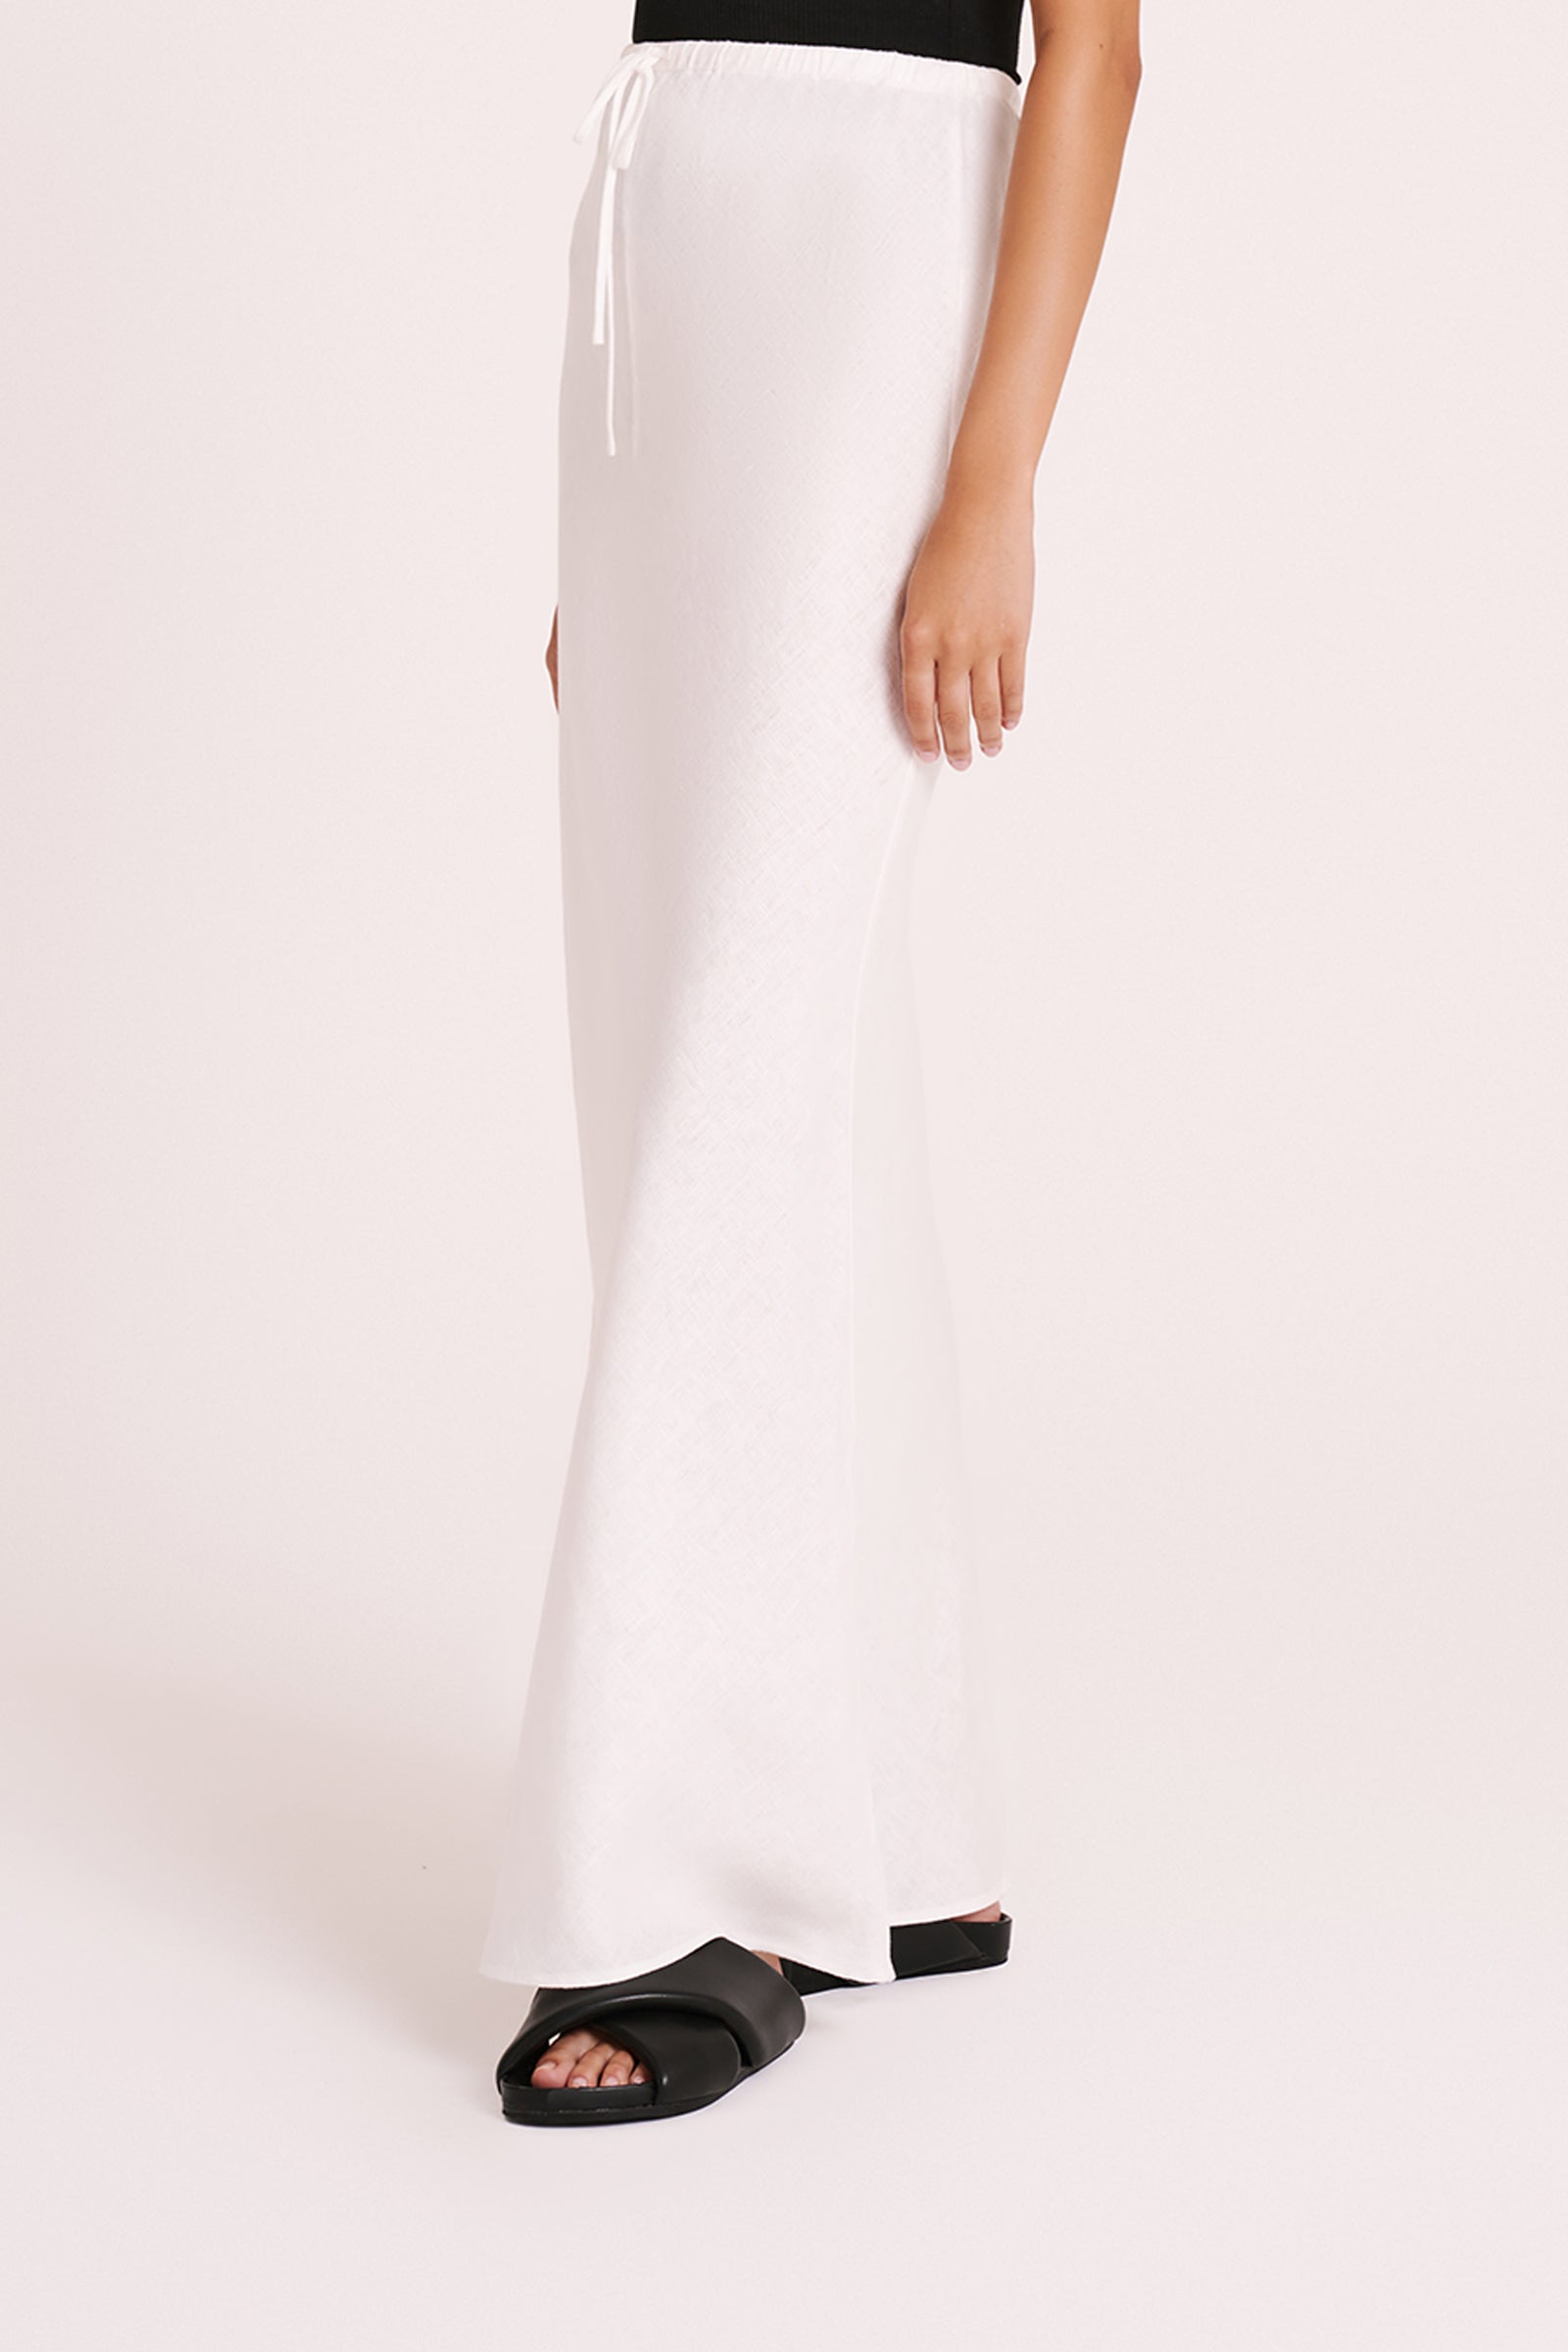 Amani Linen Skirt White 